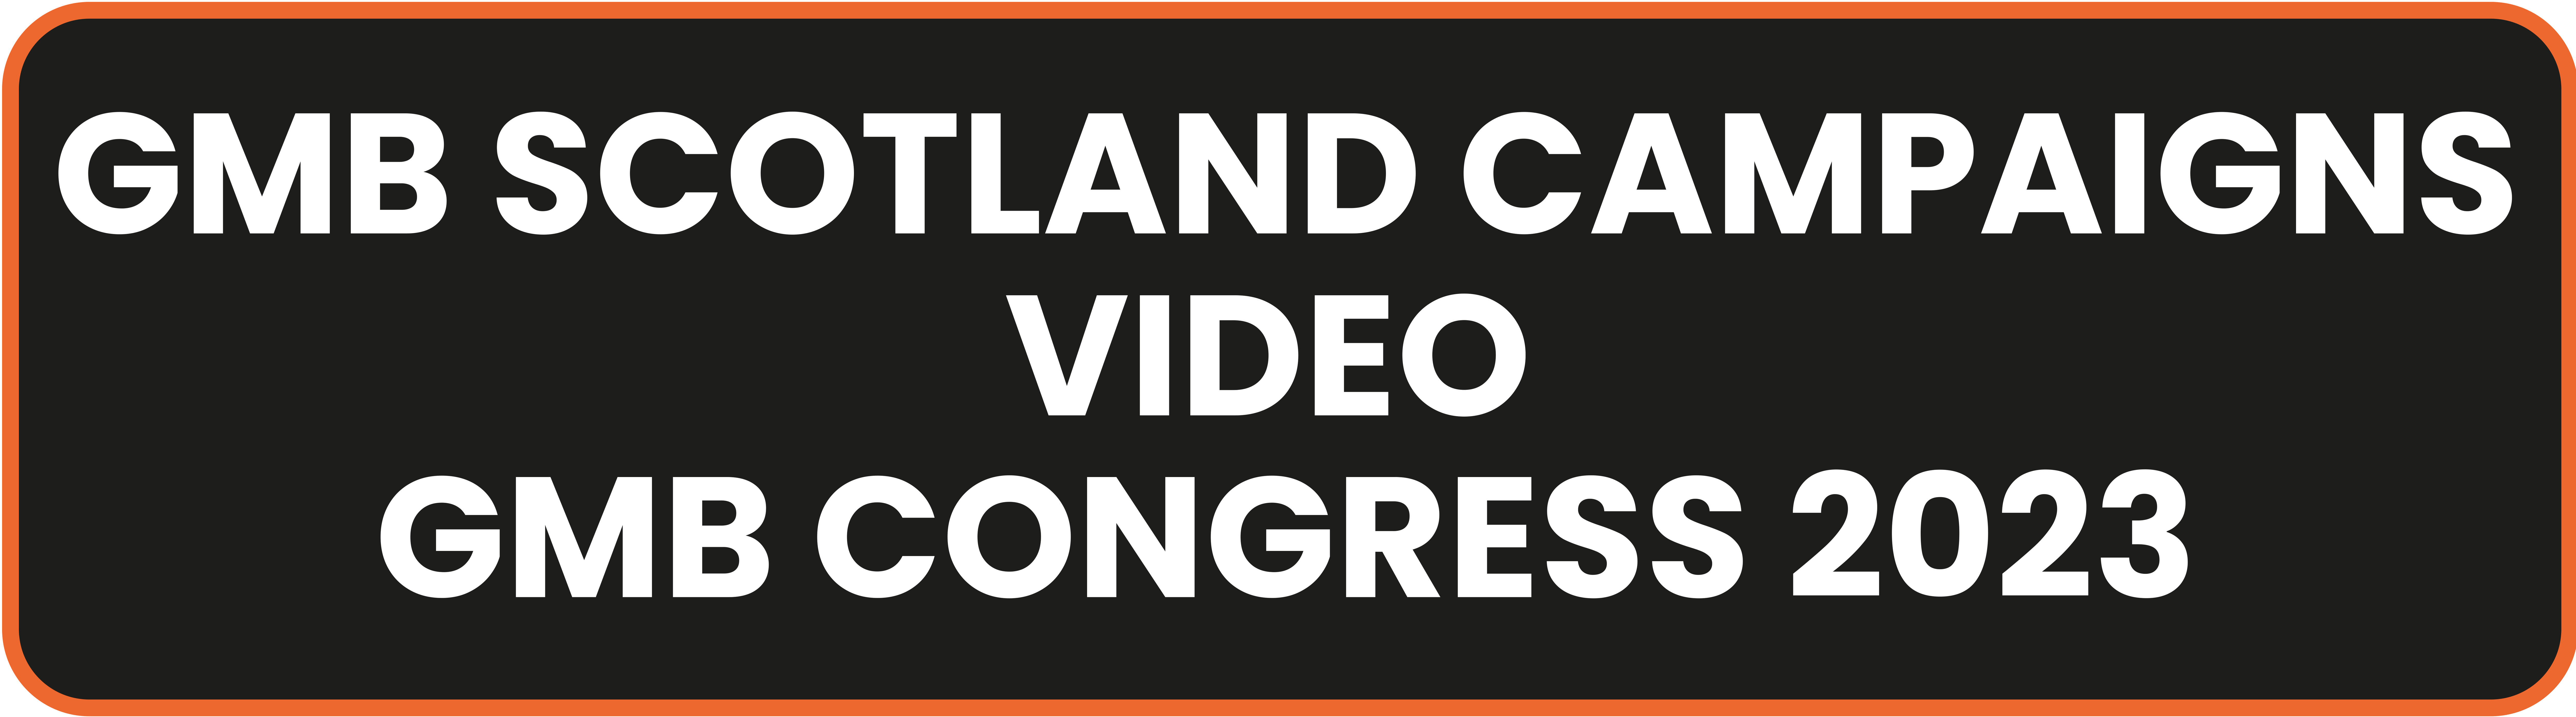 GMB Scotland Campaign Video GMB Congress 2023